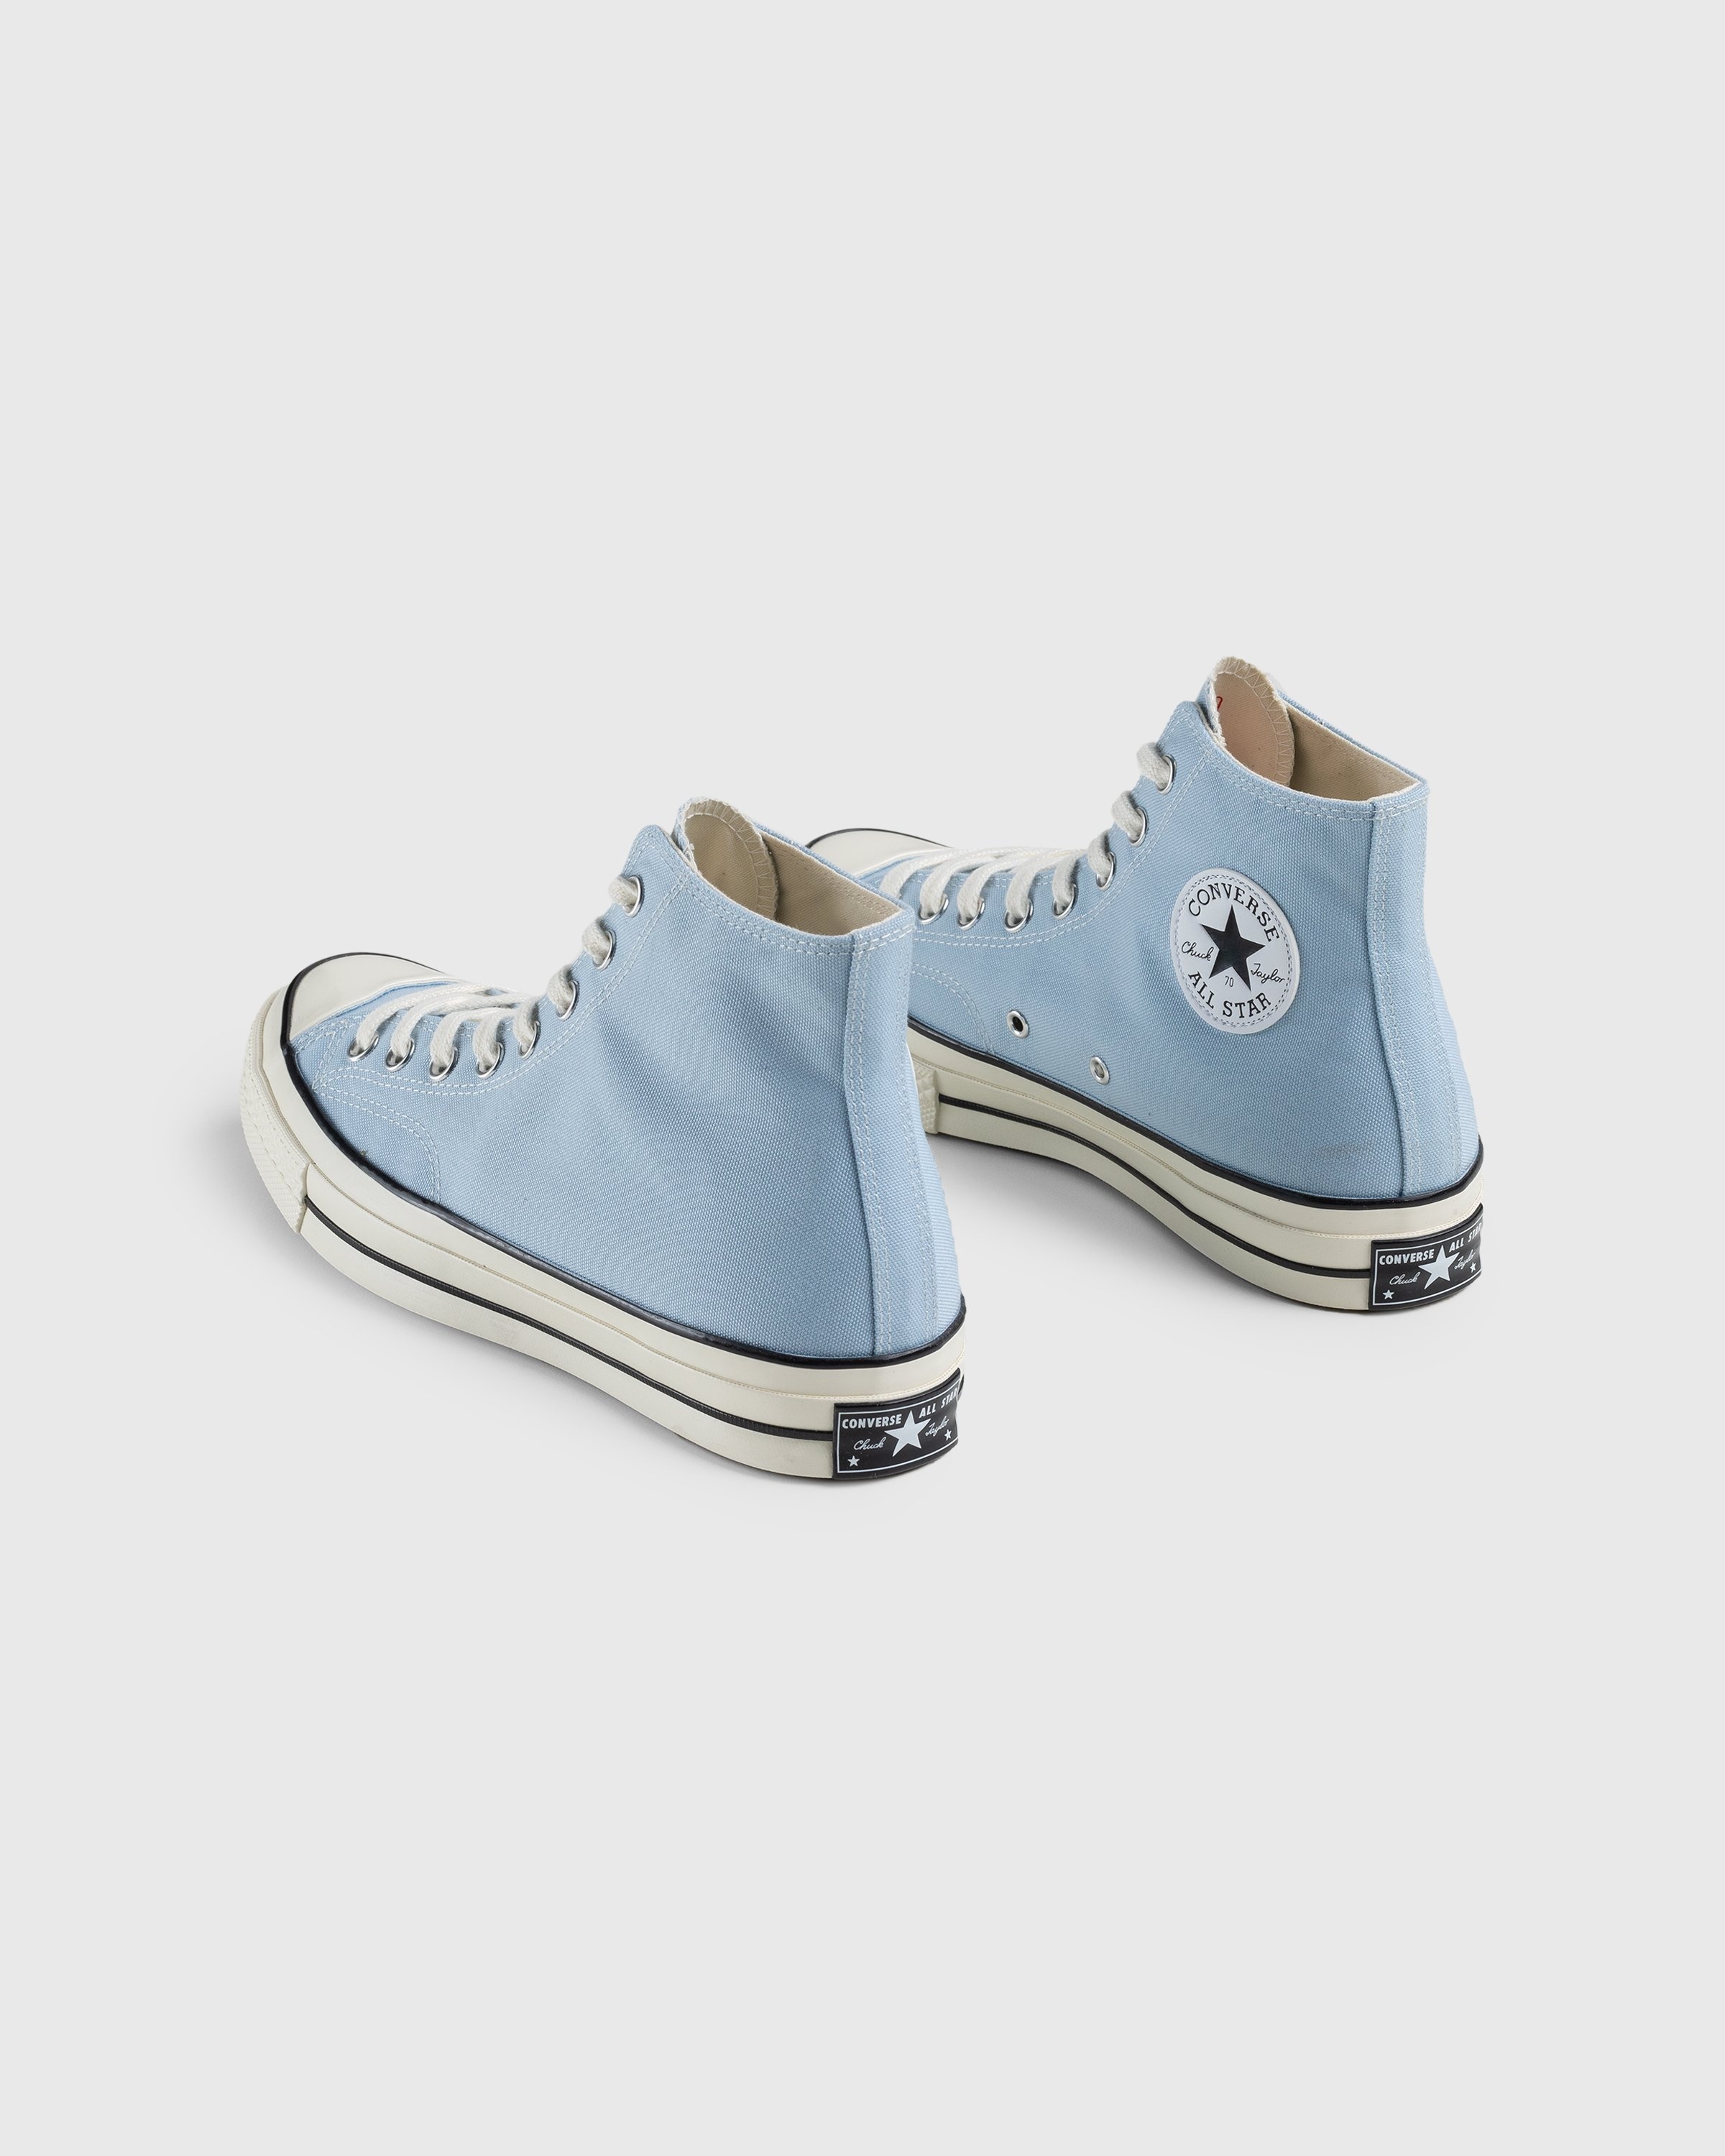 Converse – Chuck 70 Hi Lt Armory Blue/Egret/Black - High Top Sneakers - Blue - Image 4